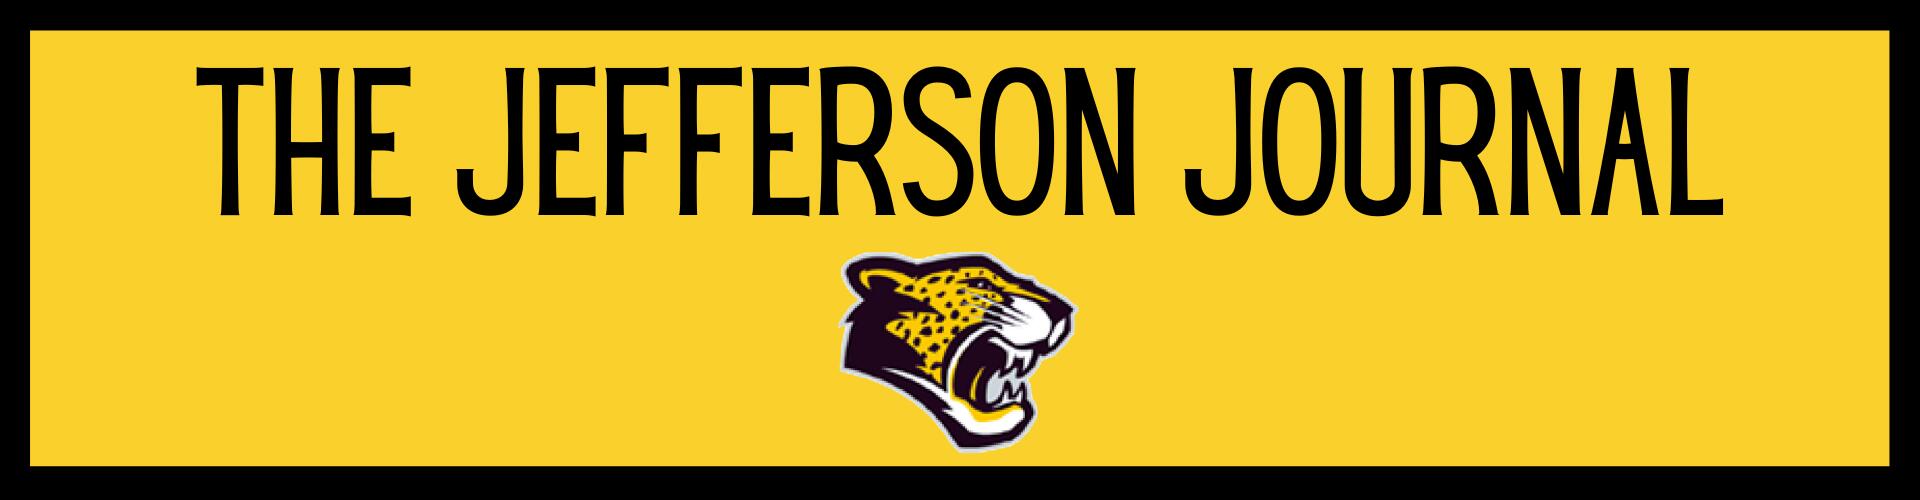 Jefferson Journal section banner